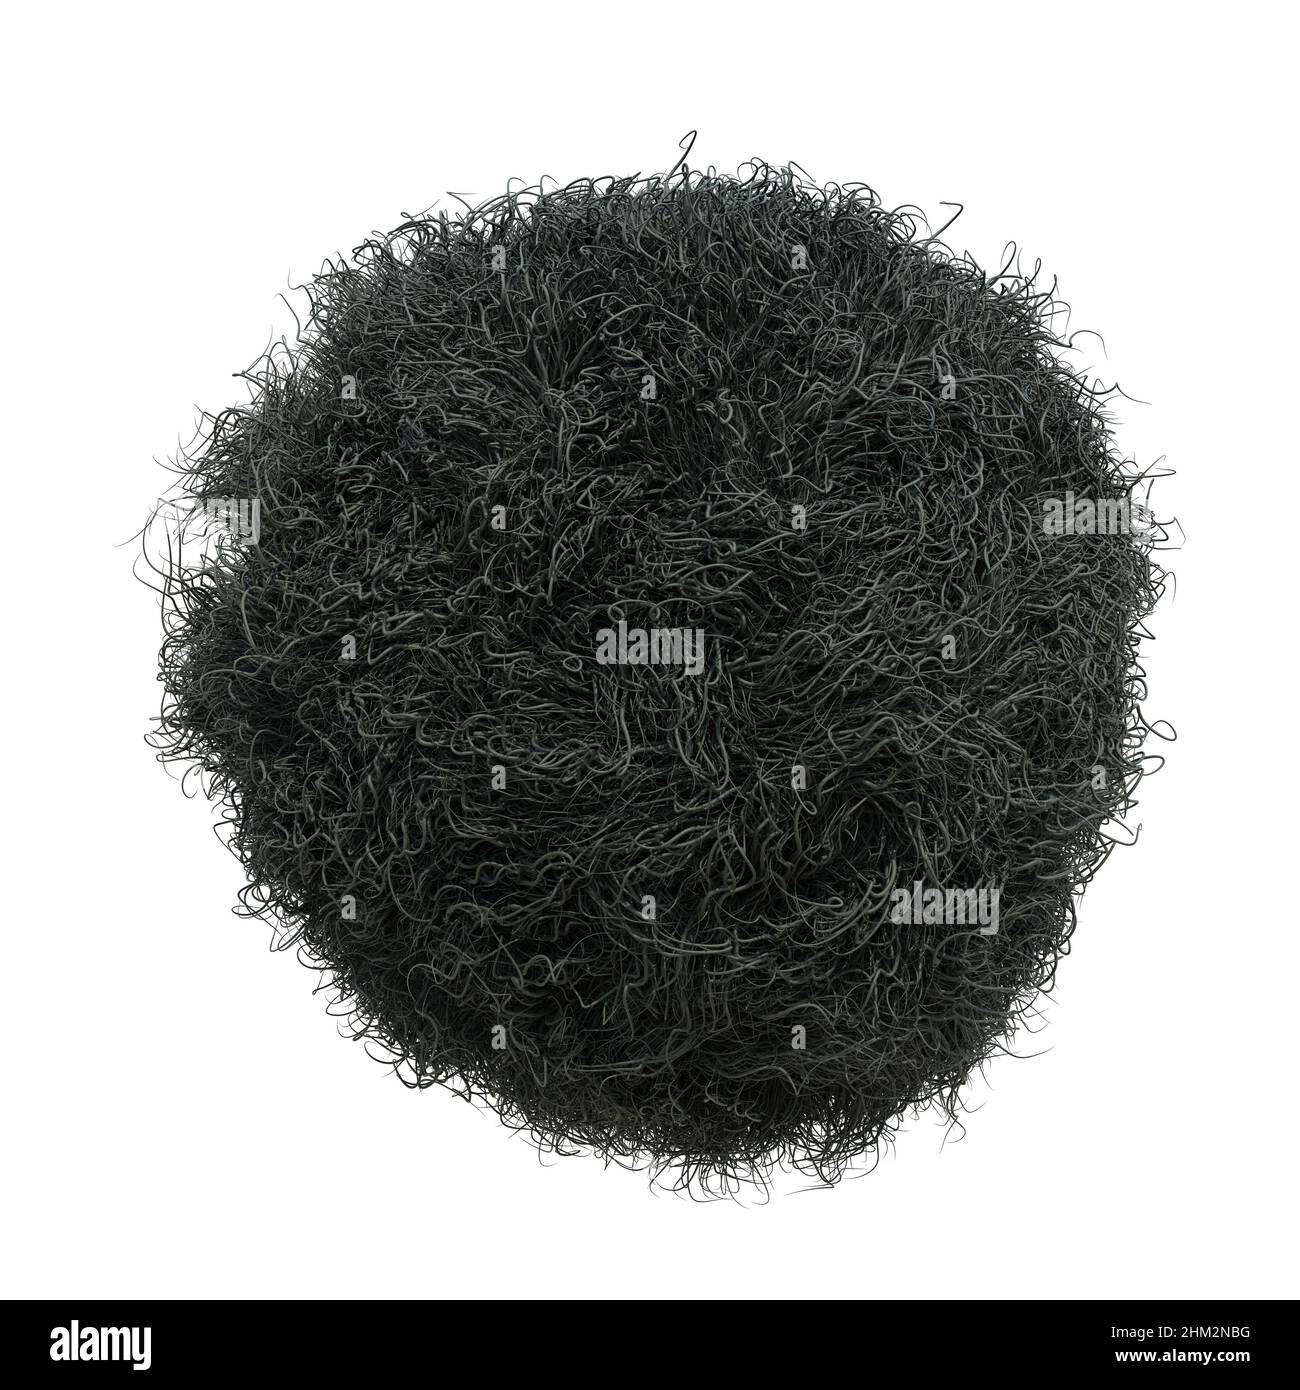 bola esponjosa, esfera negra peluda aislada sobre fondo blanco Foto de stock